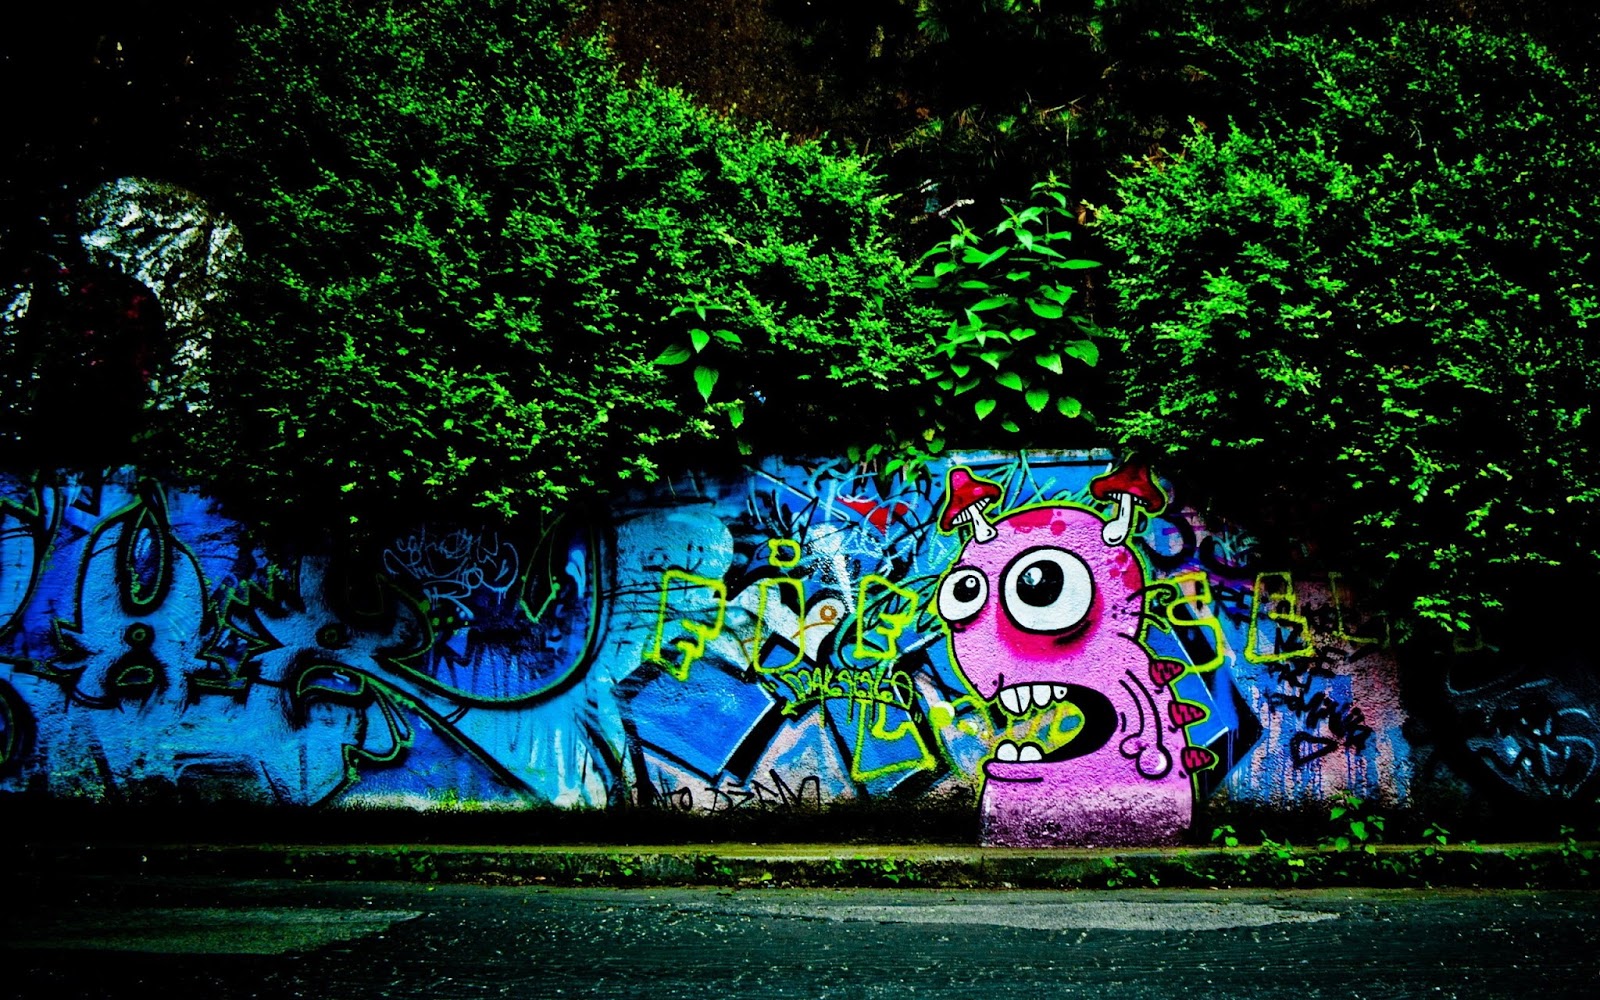 Wall Graffiti Wallpaper Hd Wallpapers Quality